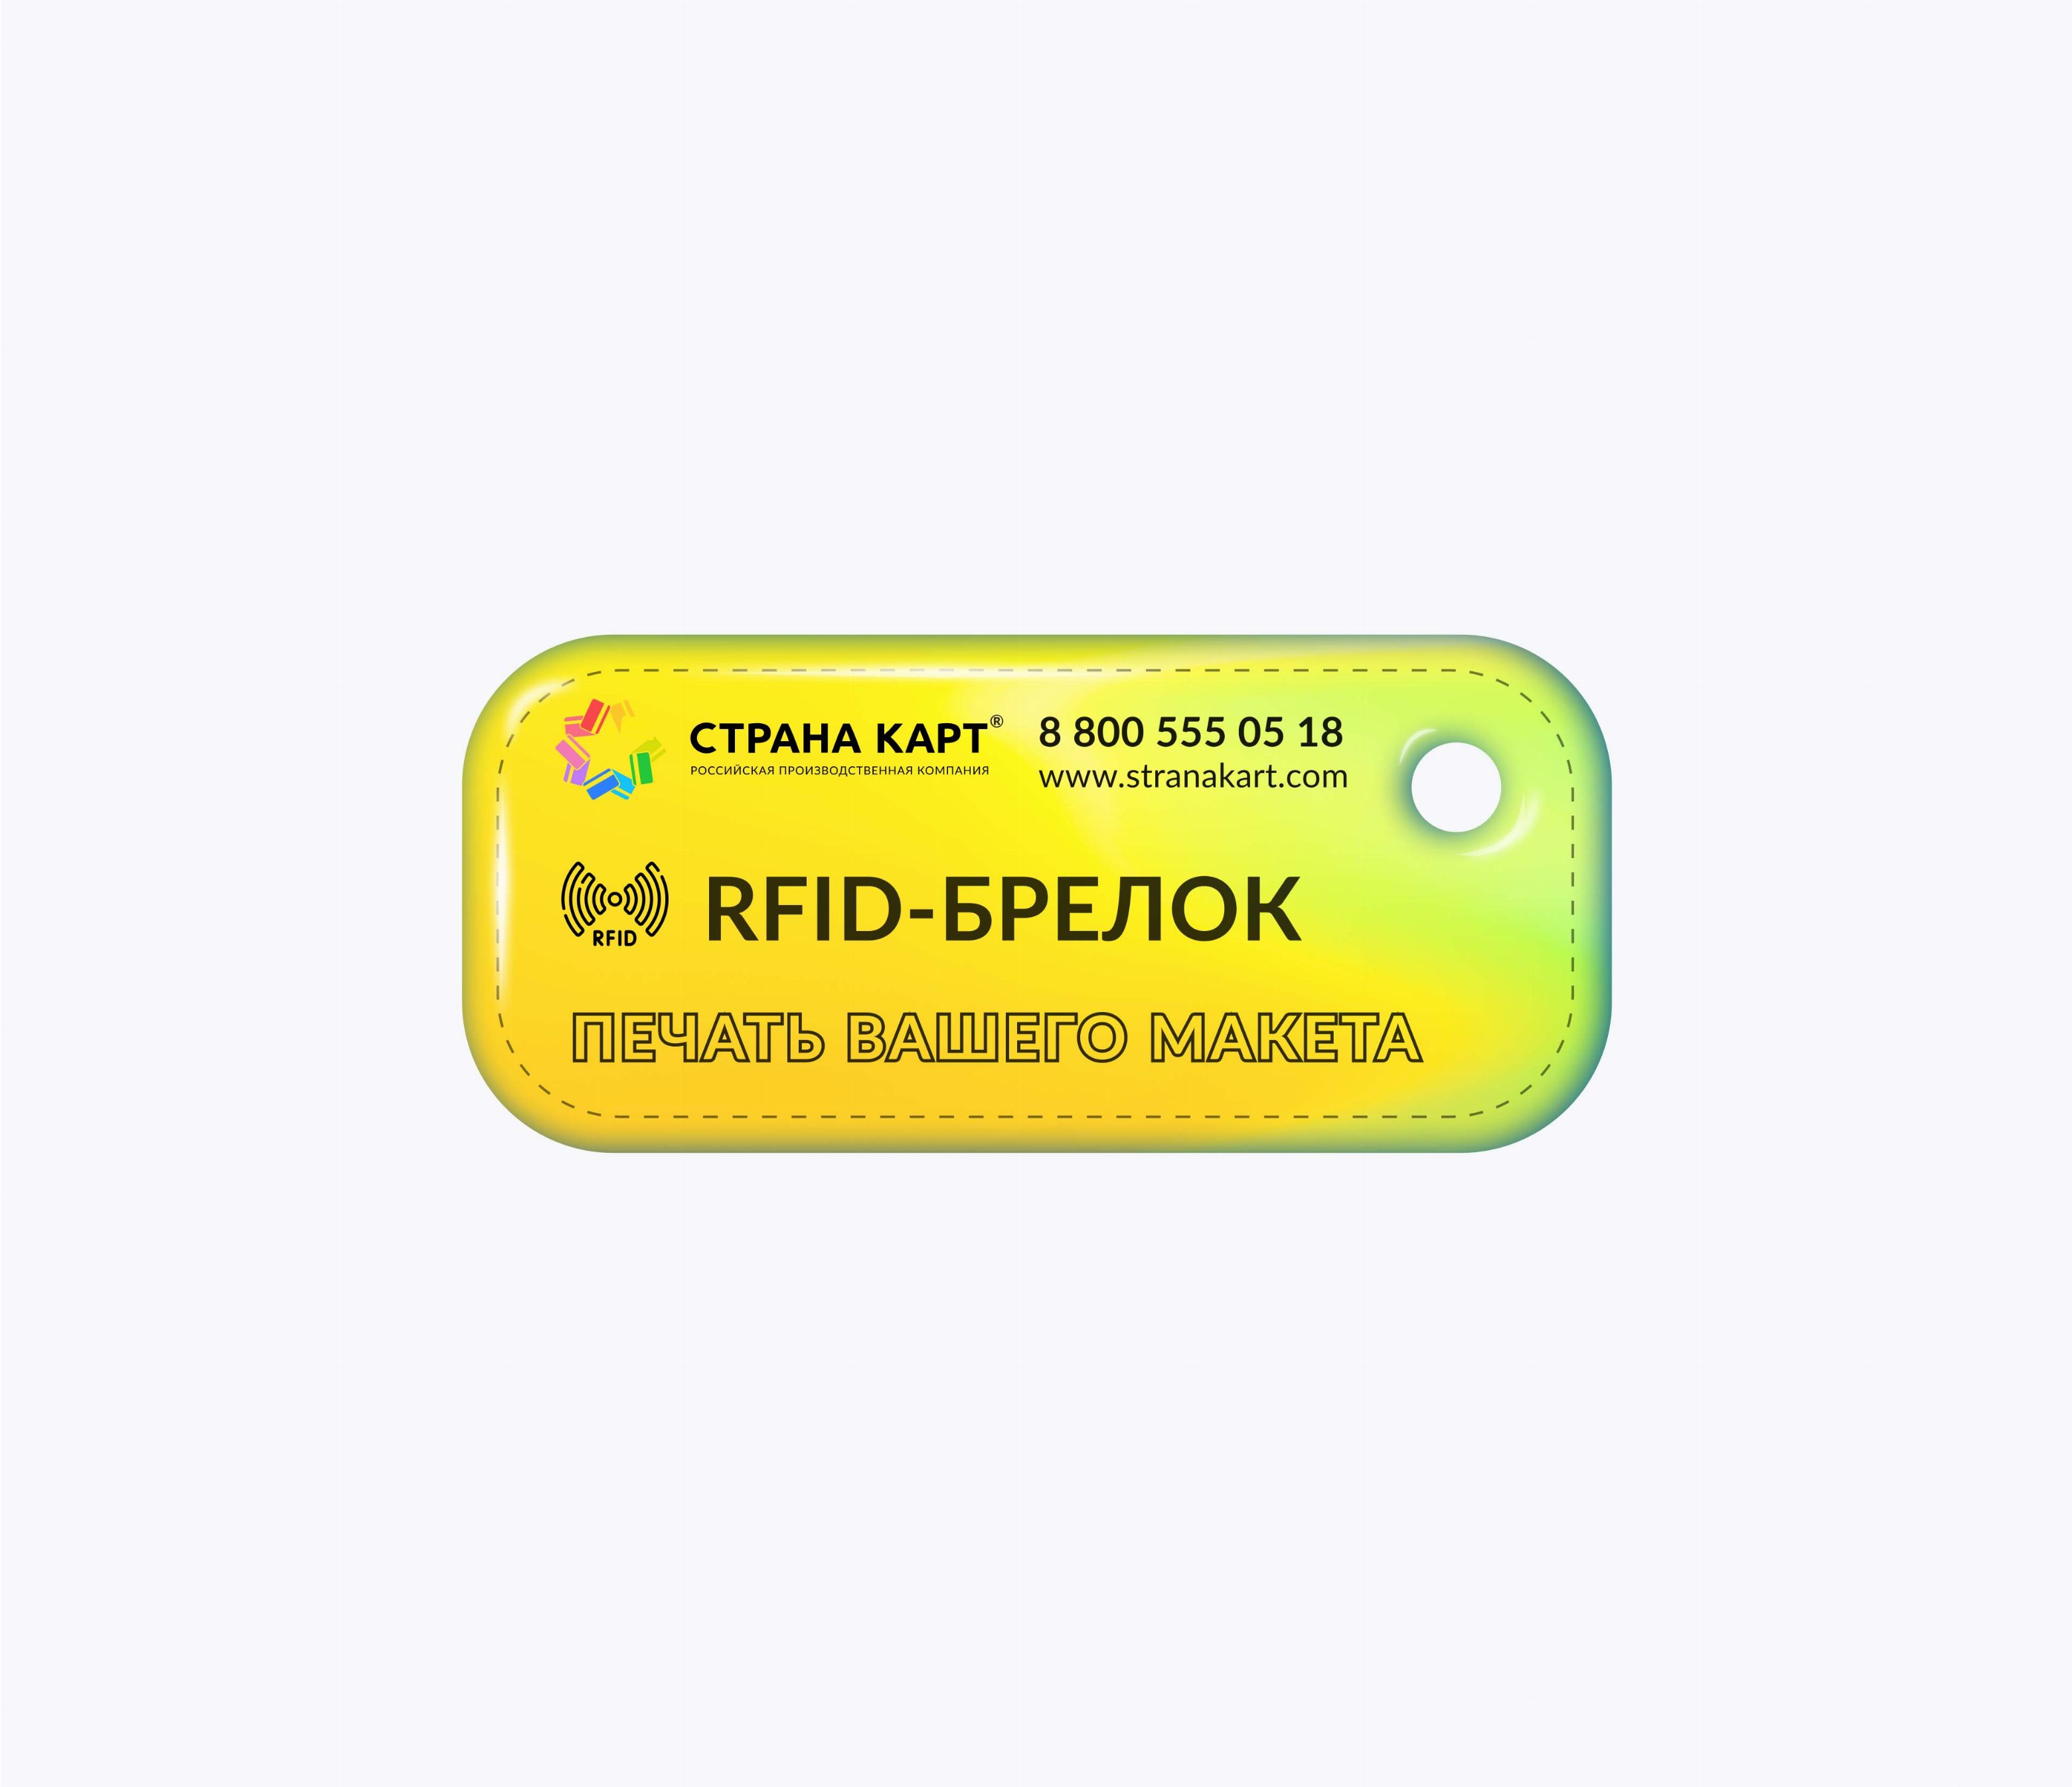 Прямоугольные мини RFID-брелоки NEOKEY® с чипом NXP MIFARE Plus S 4k 7 byte UID RFID-брелоки NEOKEY® с чипом NXP MIFARE Plus S 4k 7 byte UID и вашим логотипом